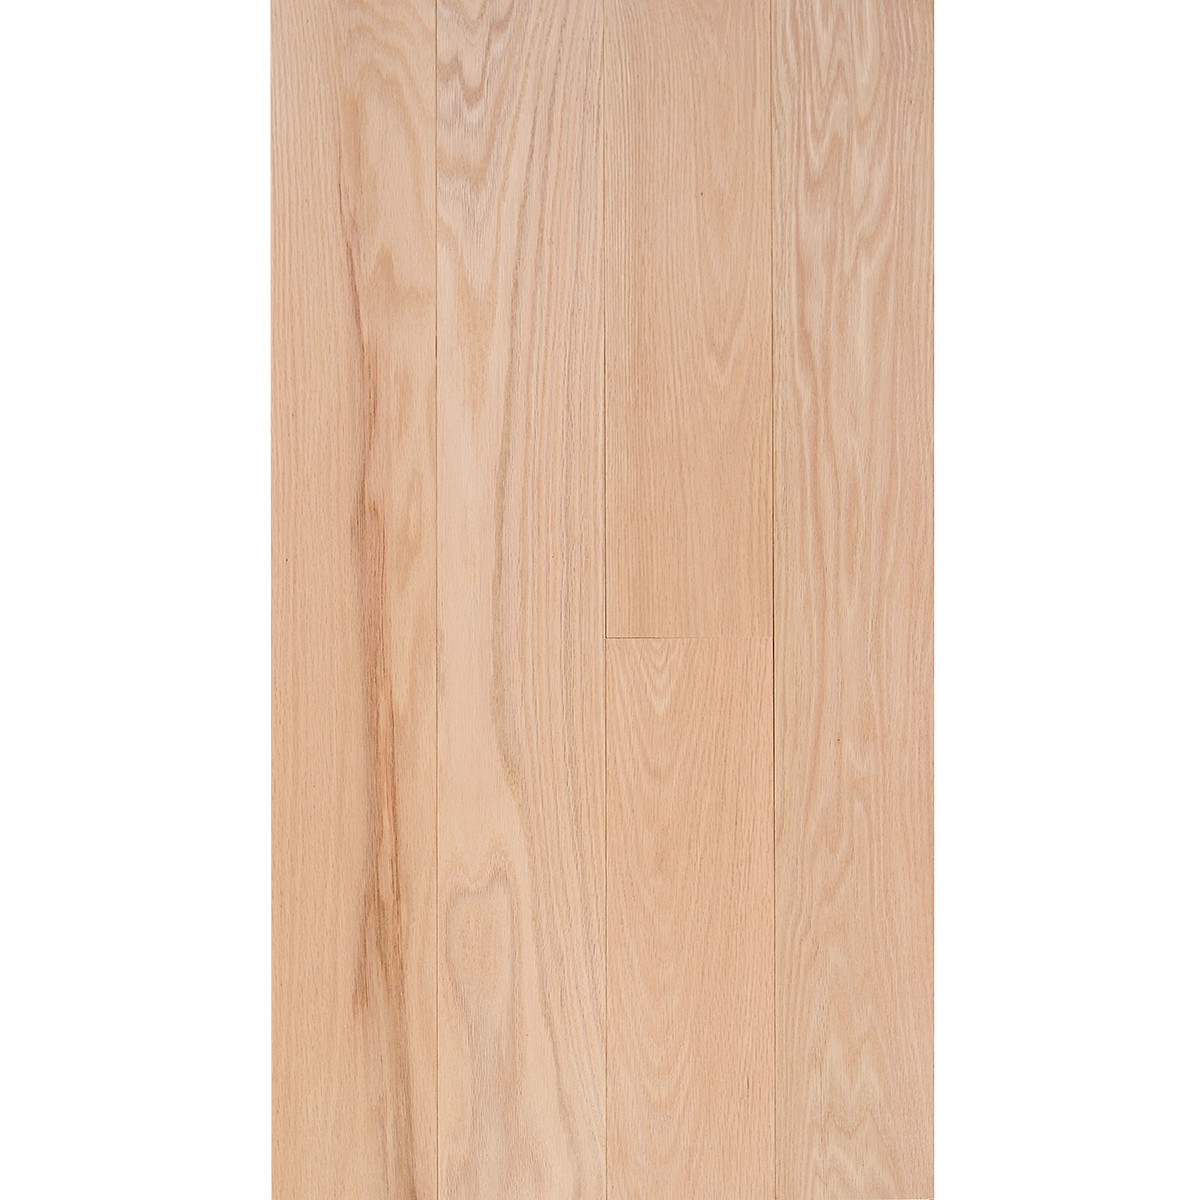 hardwood floor grey oak of red oak 3 4 x 5 select grade flooring pertaining to fs 5 redoak select em flooring